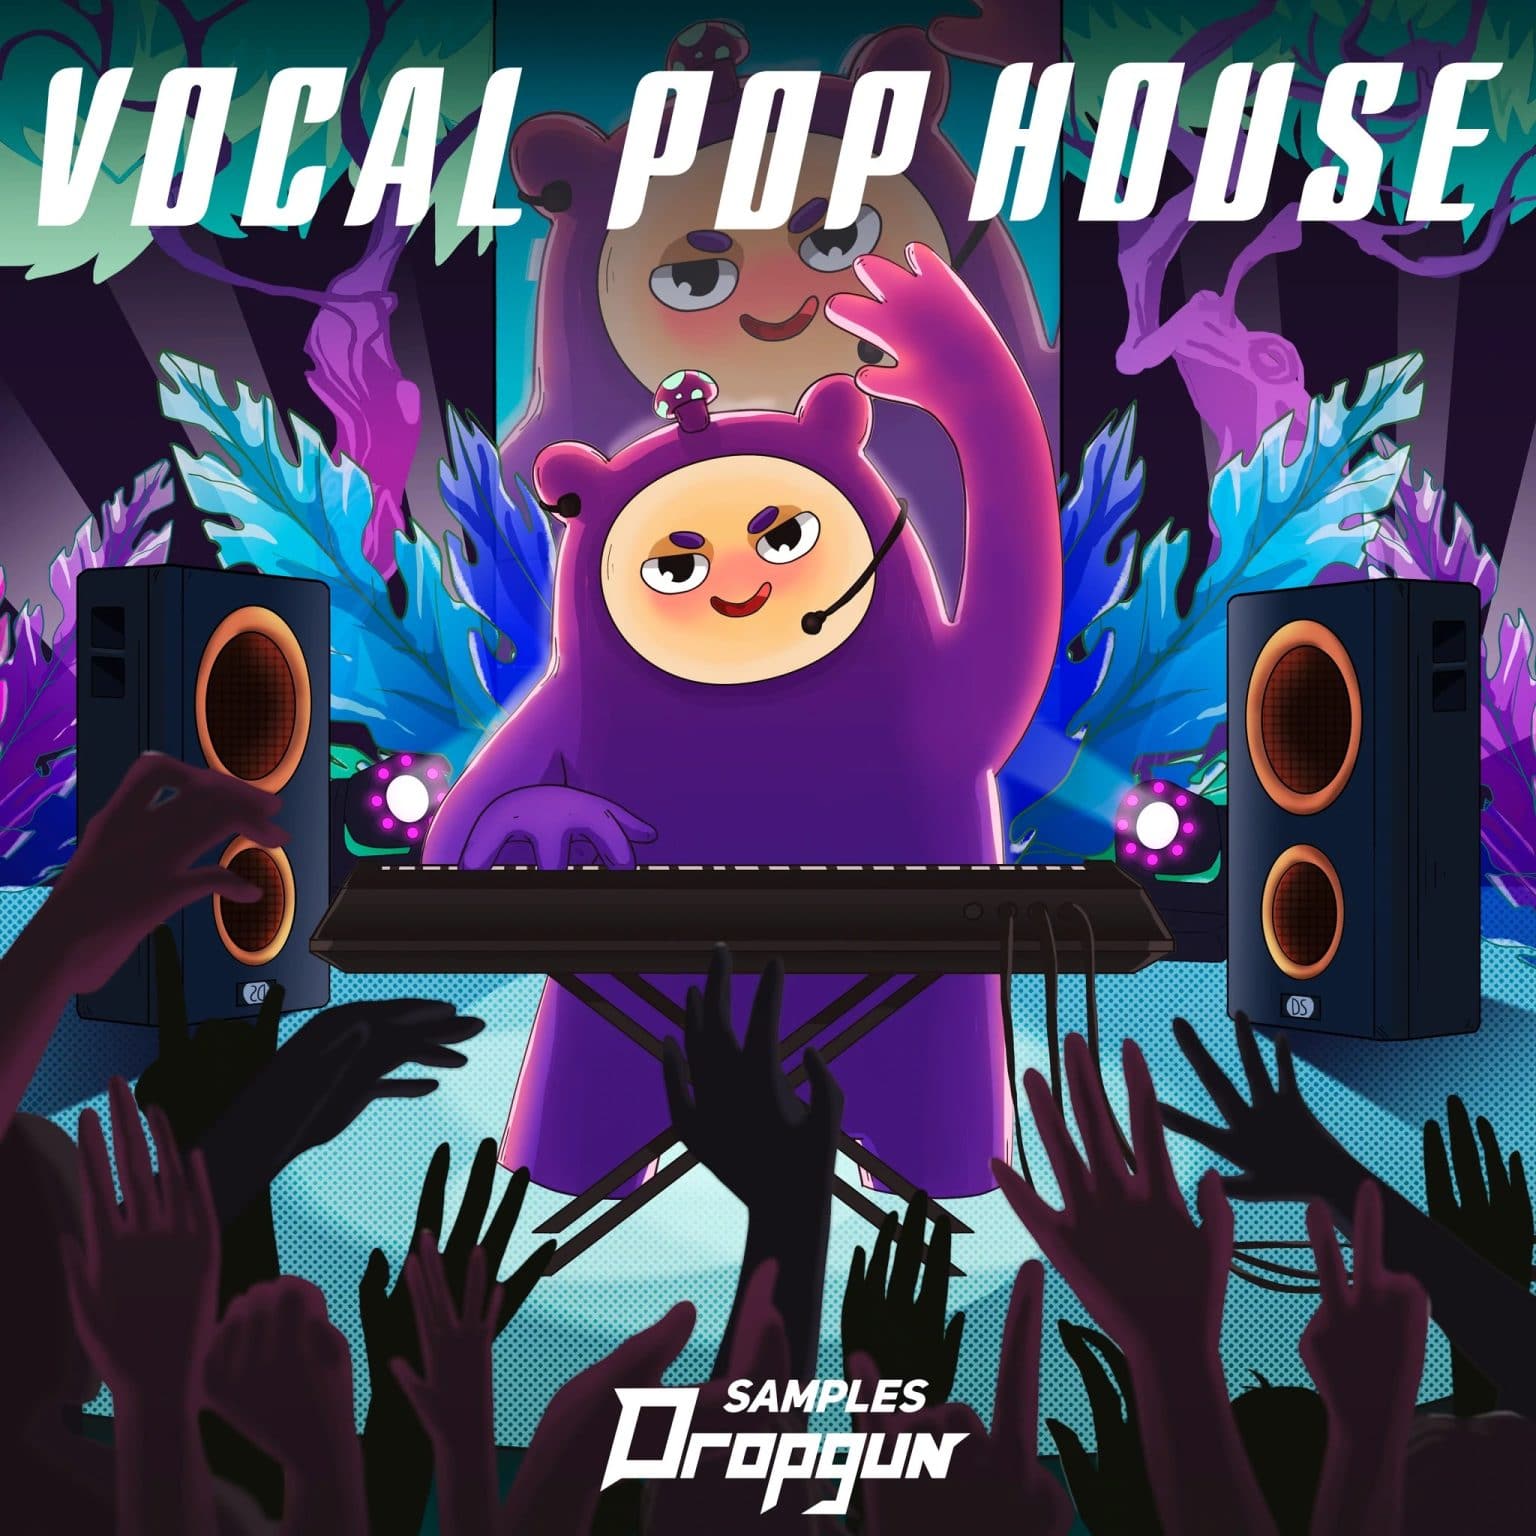 Dropgun Samples - Vocal Pop House - ProducerWAV